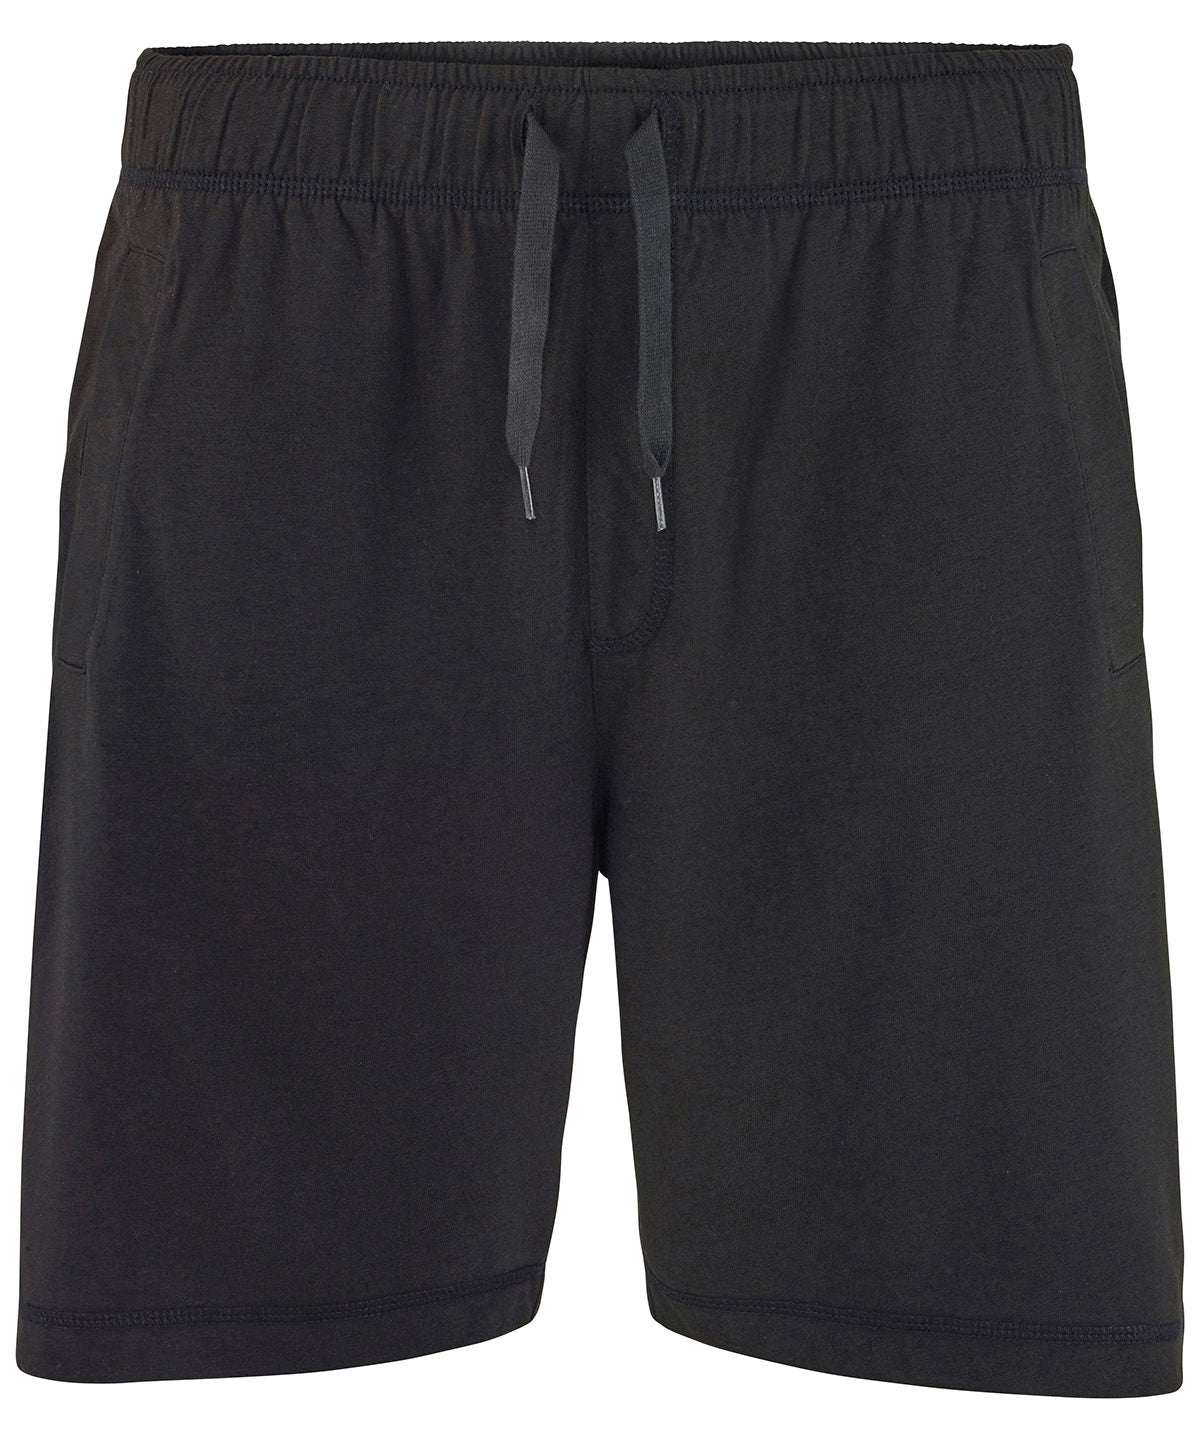 Personalised Shorts - Black Comfy Co Guys lounge shorts